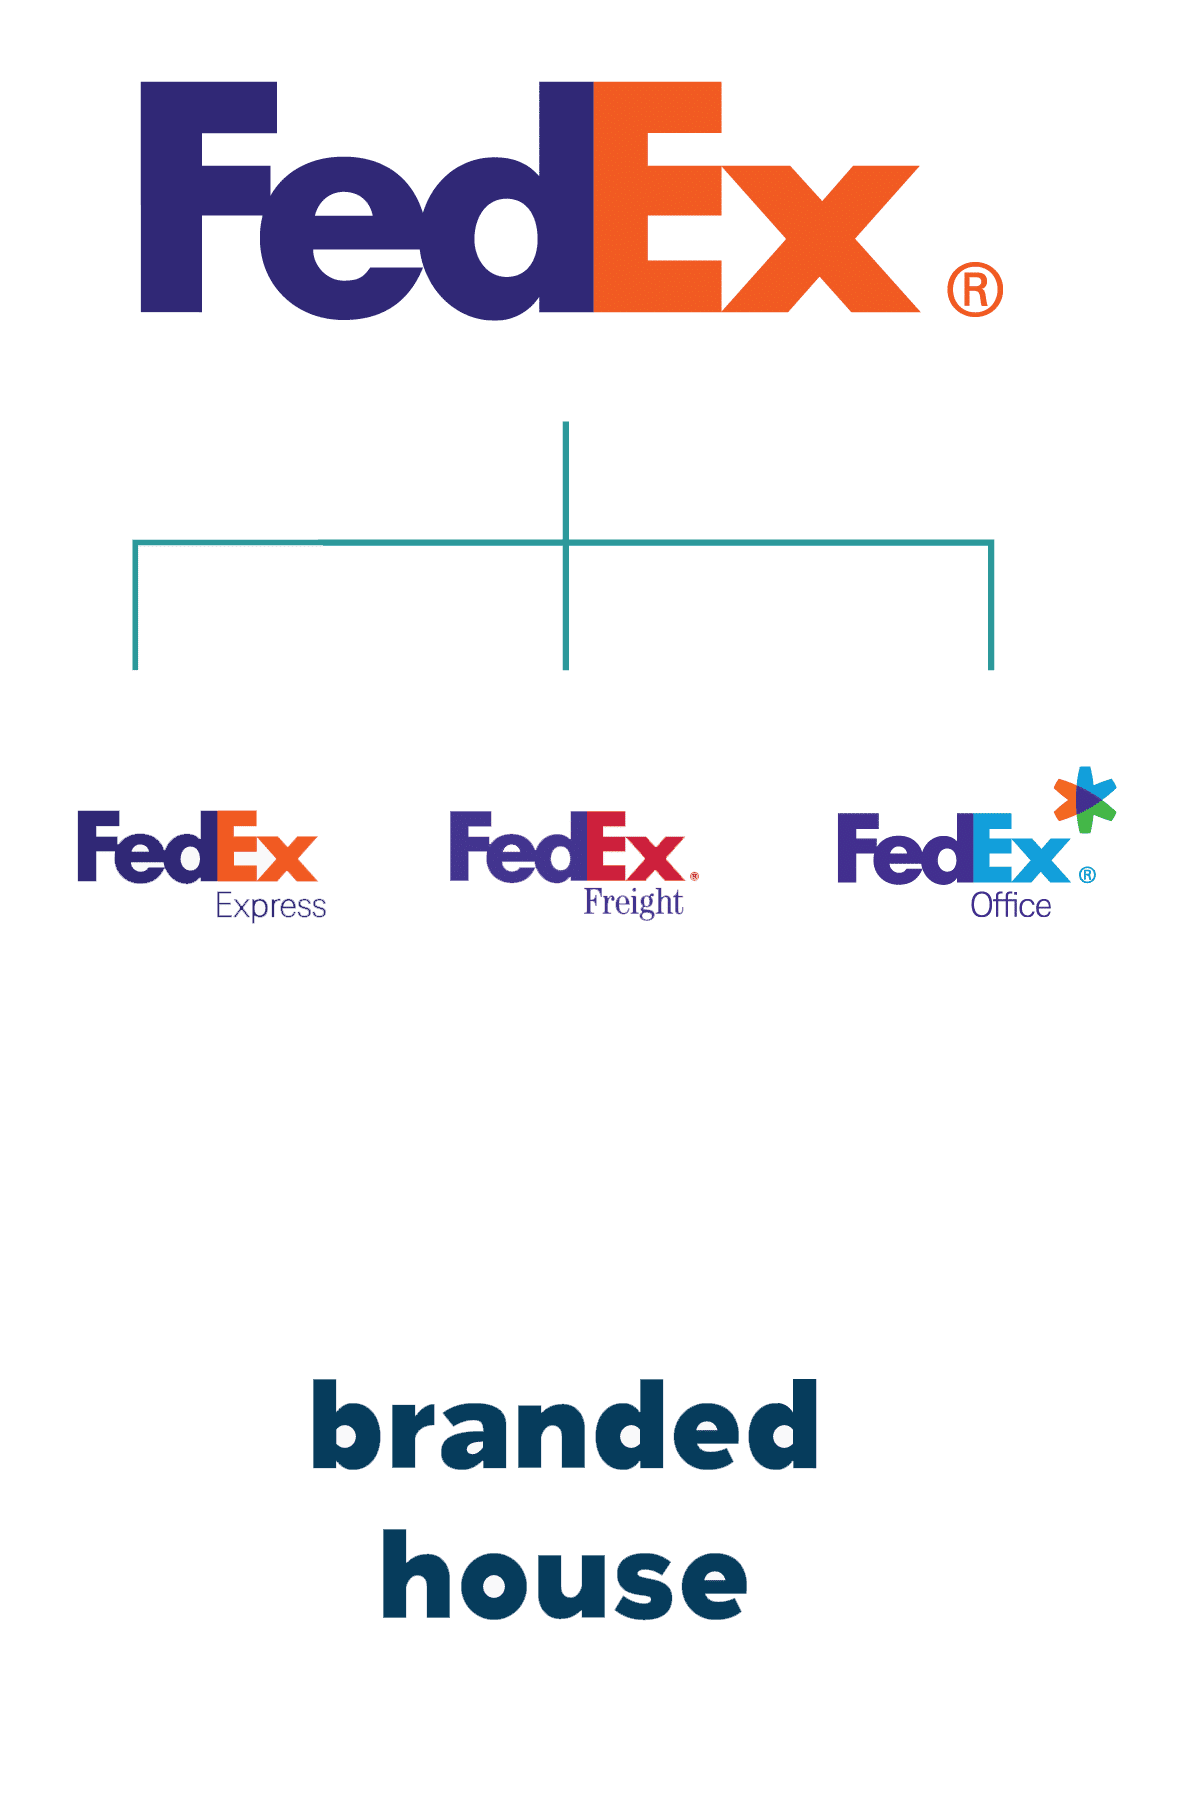 example branded house fedex